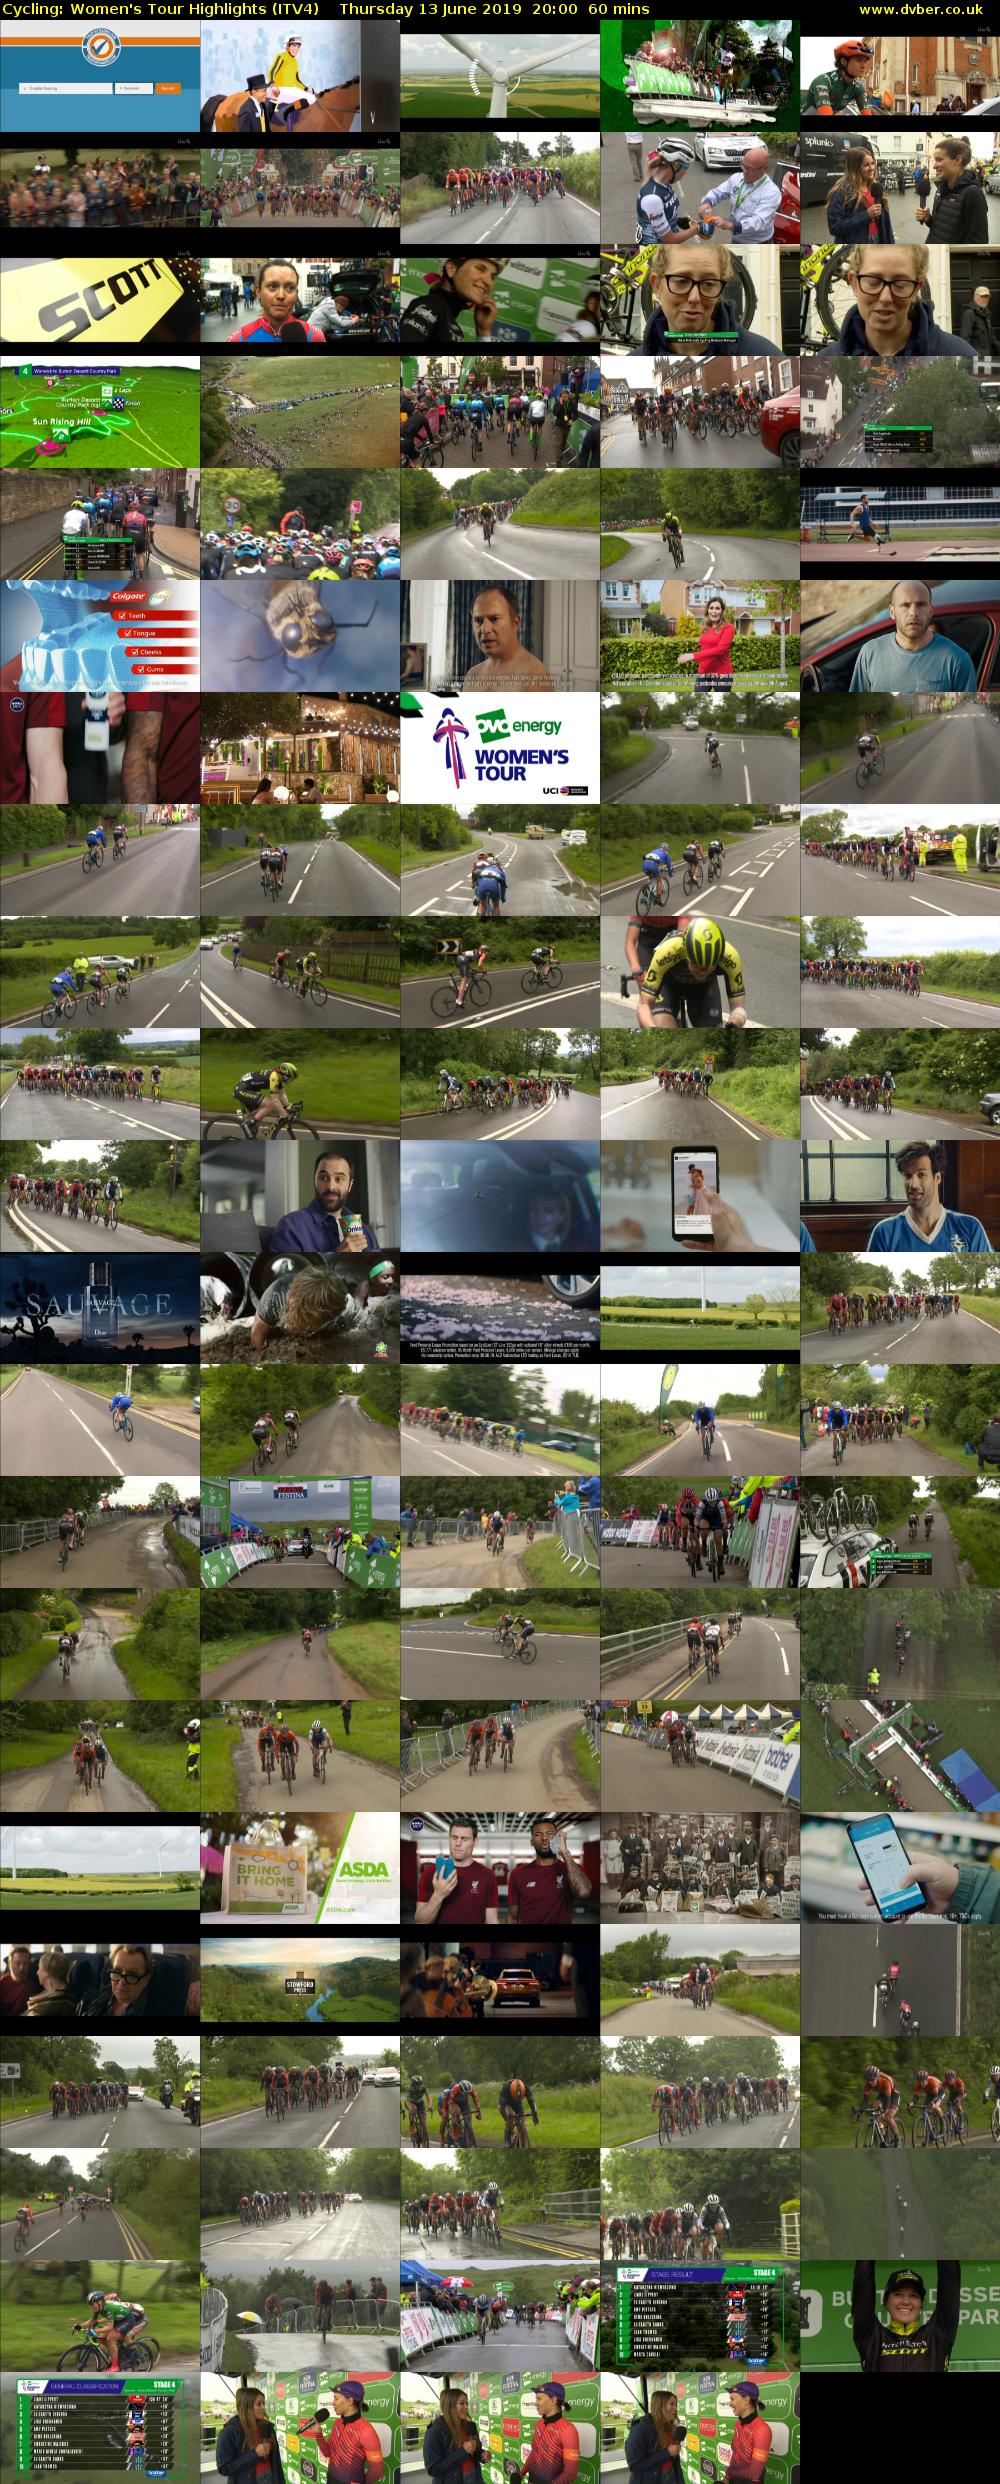 Cycling: Women's Tour Highlights (ITV4) Thursday 13 June 2019 20:00 - 21:00